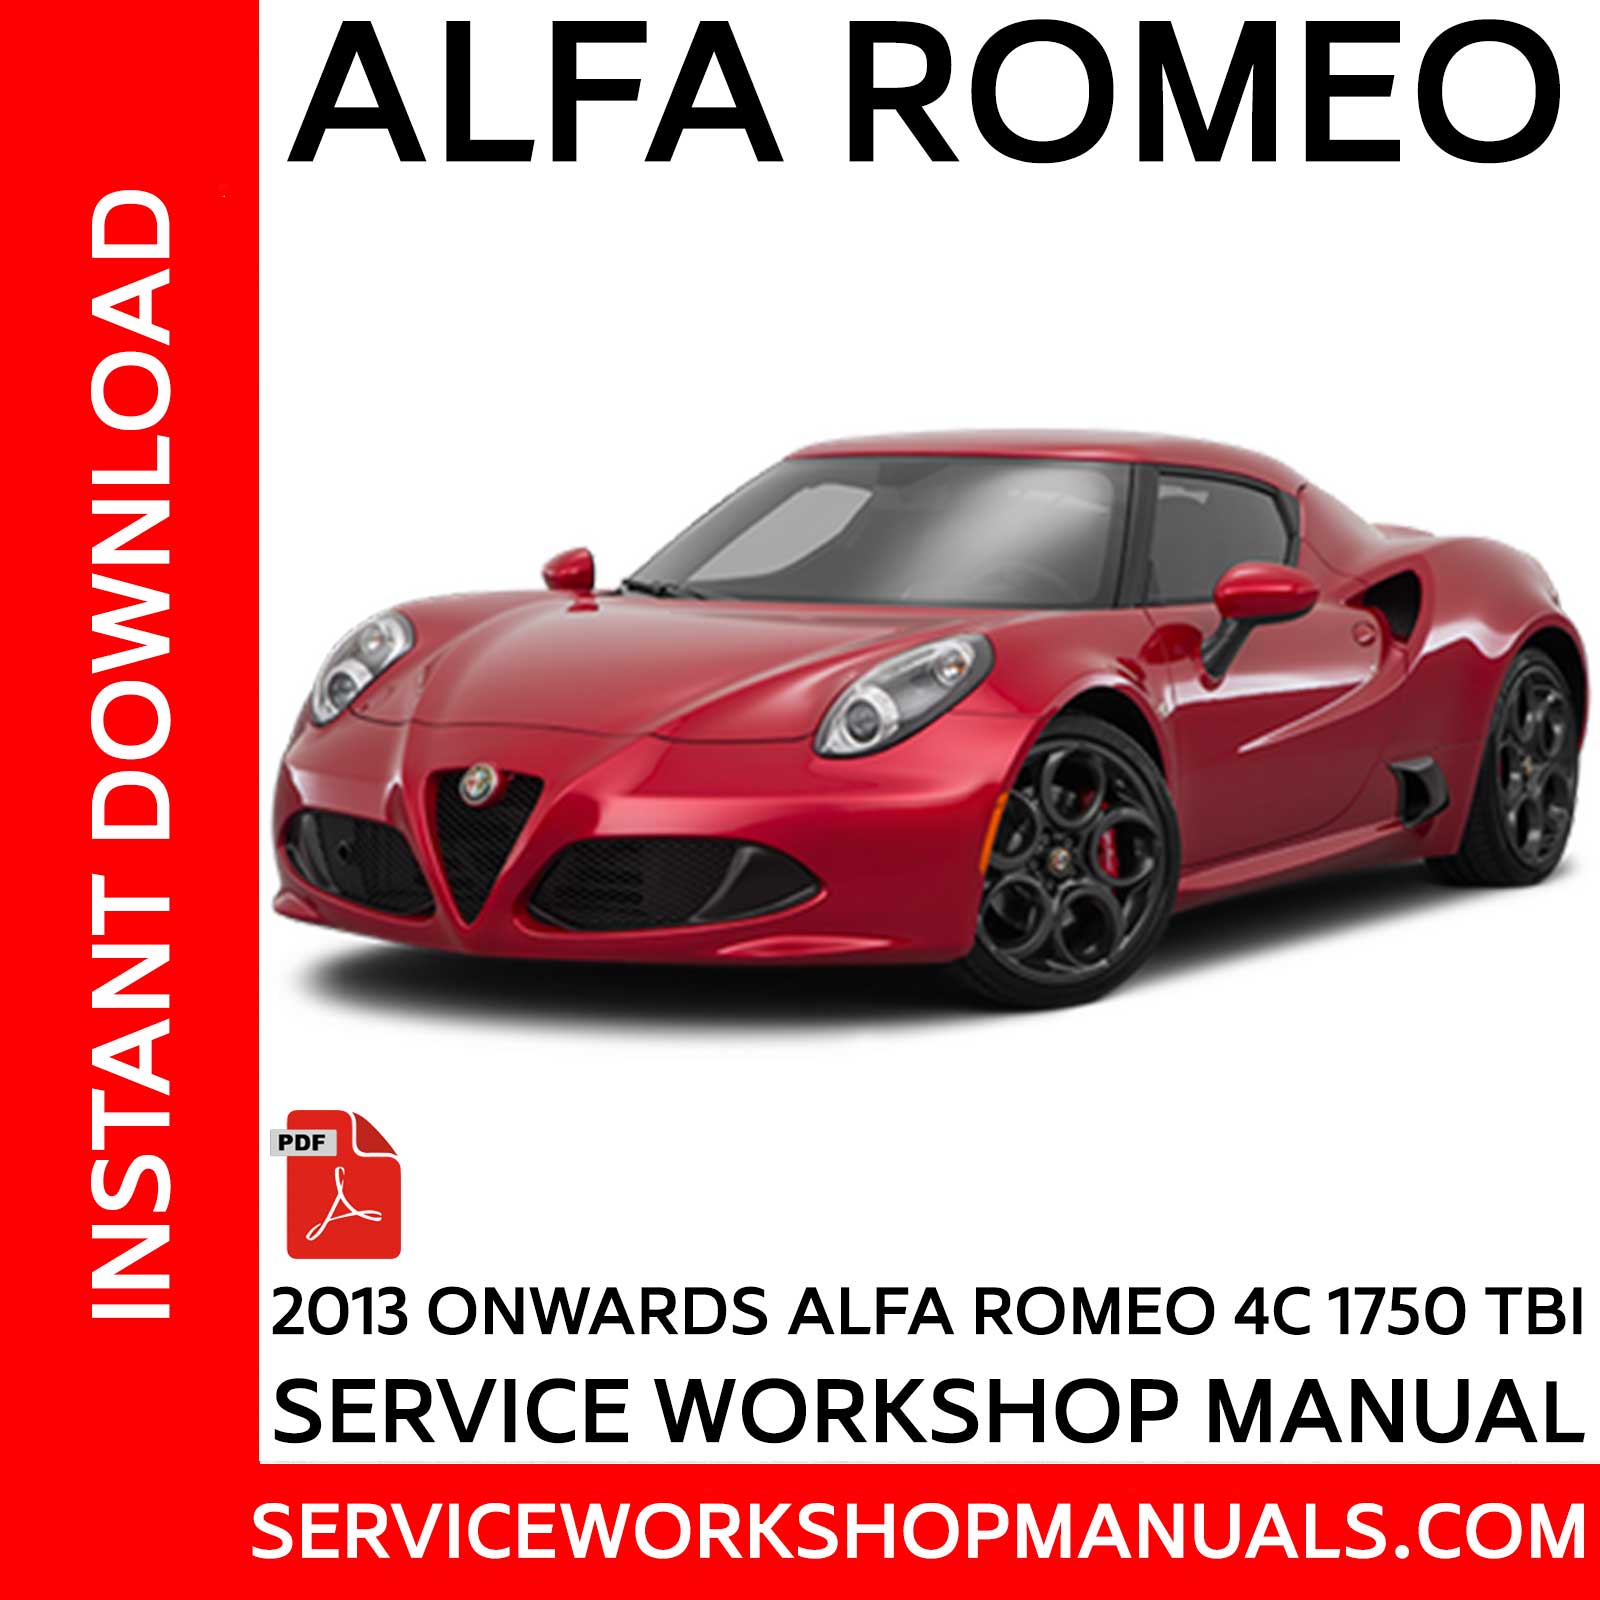 Alfa Romeo 4C 1750 TBI 2013 Onwards Service Manual Service